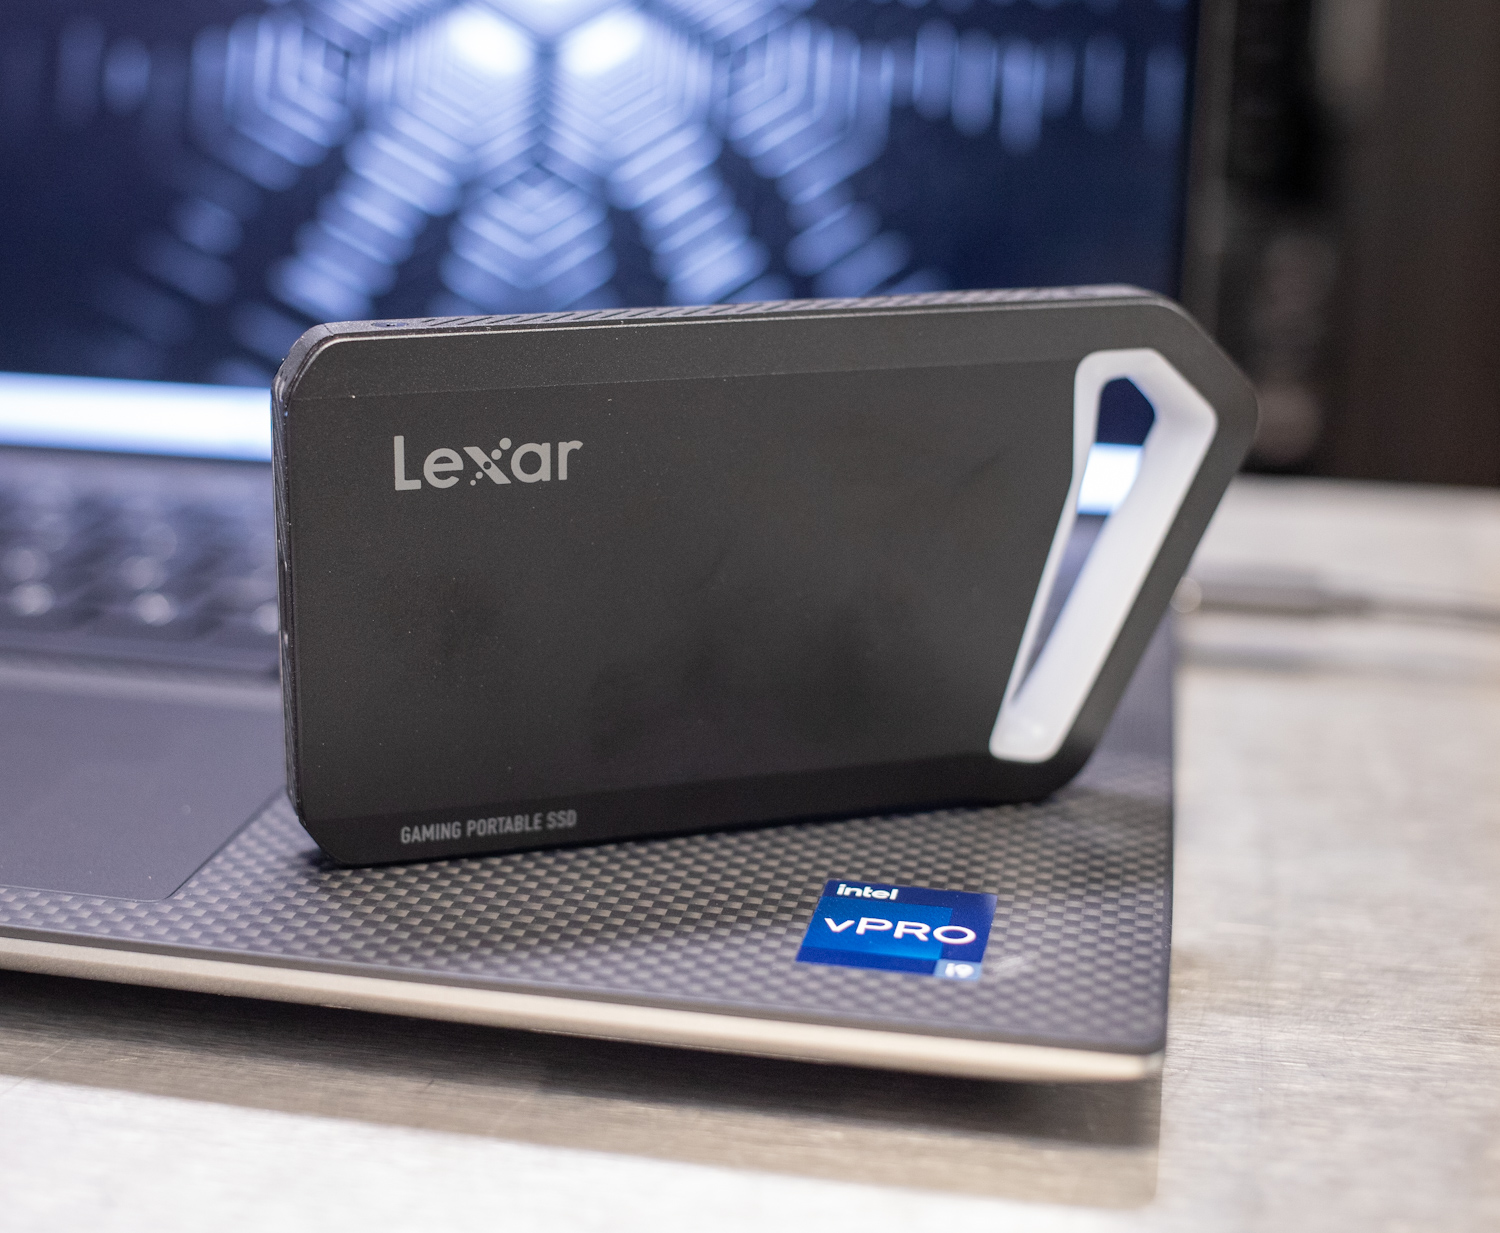 Lexar Portable Solid State Drives SL660 512GB 1TB External Hard